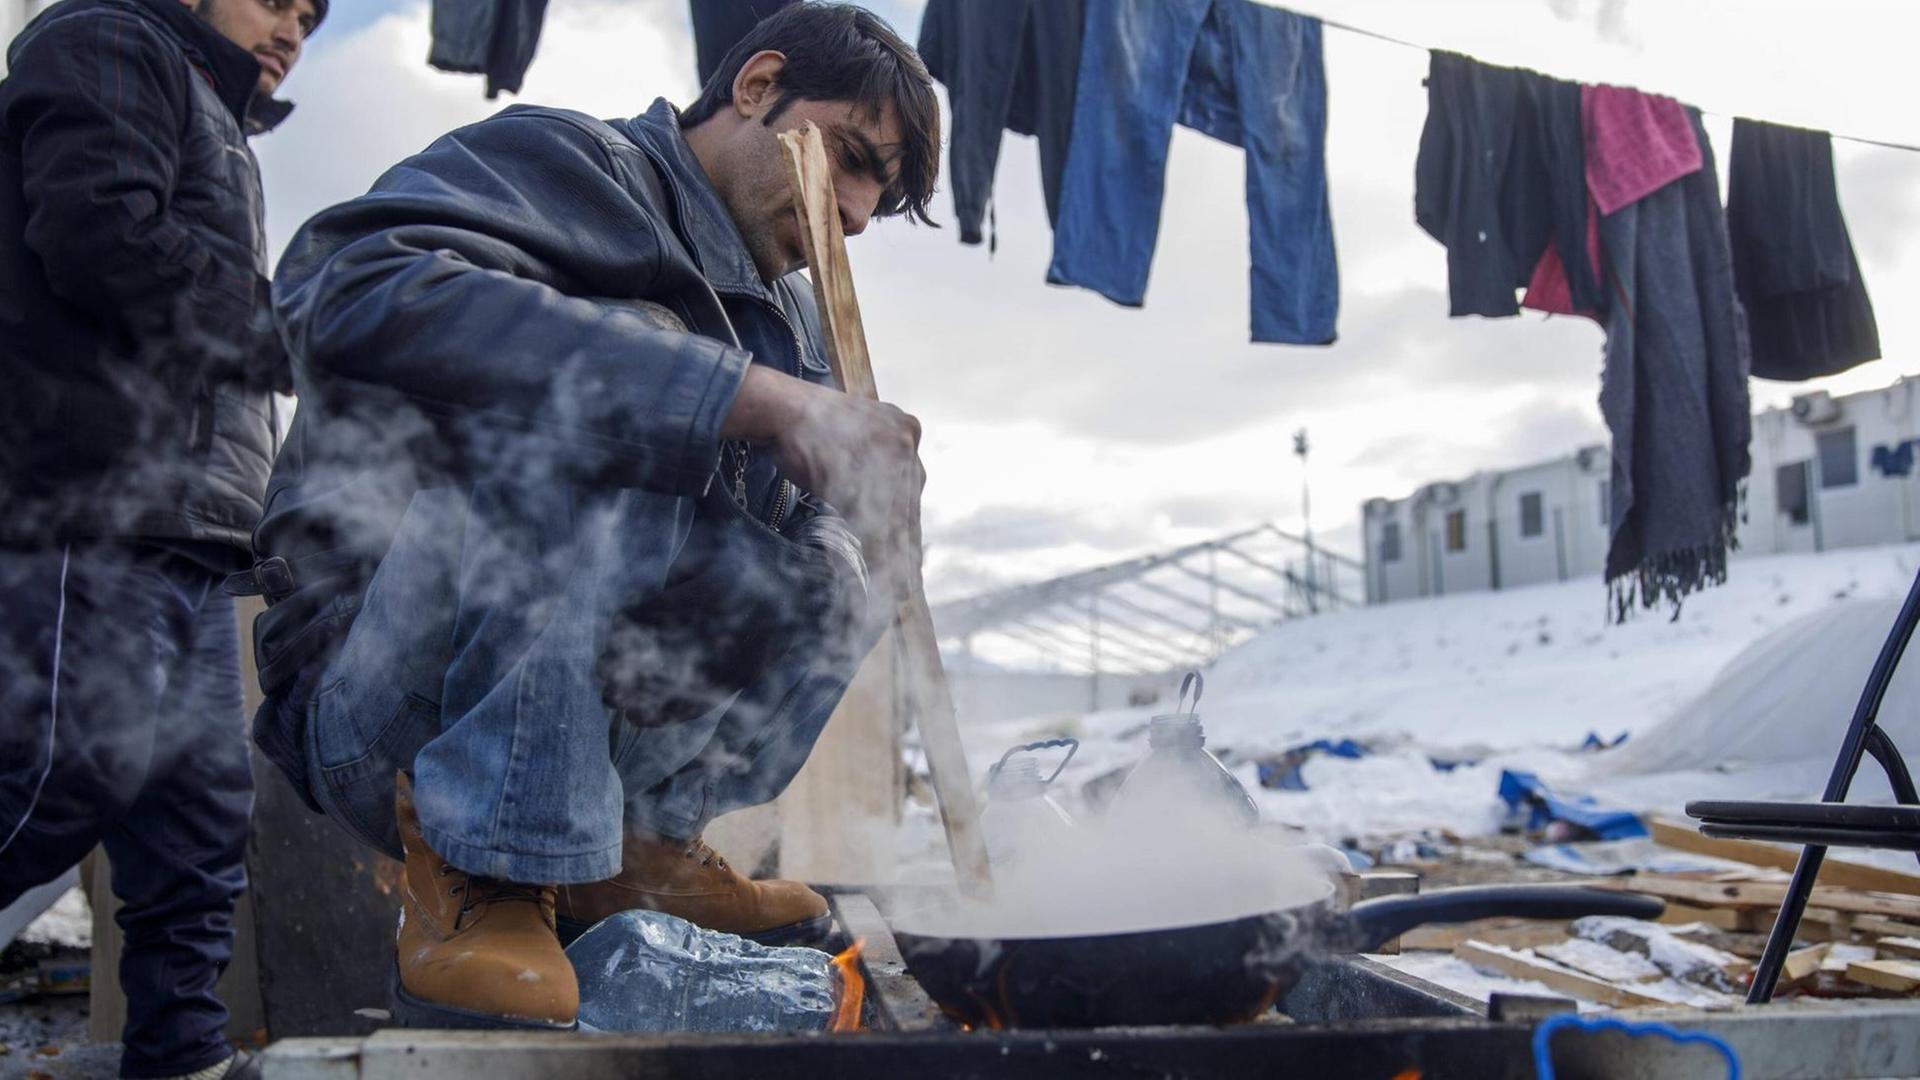 Winter im Camp Lipa: Bei Minustemperaturen kochen Migranten im Freien